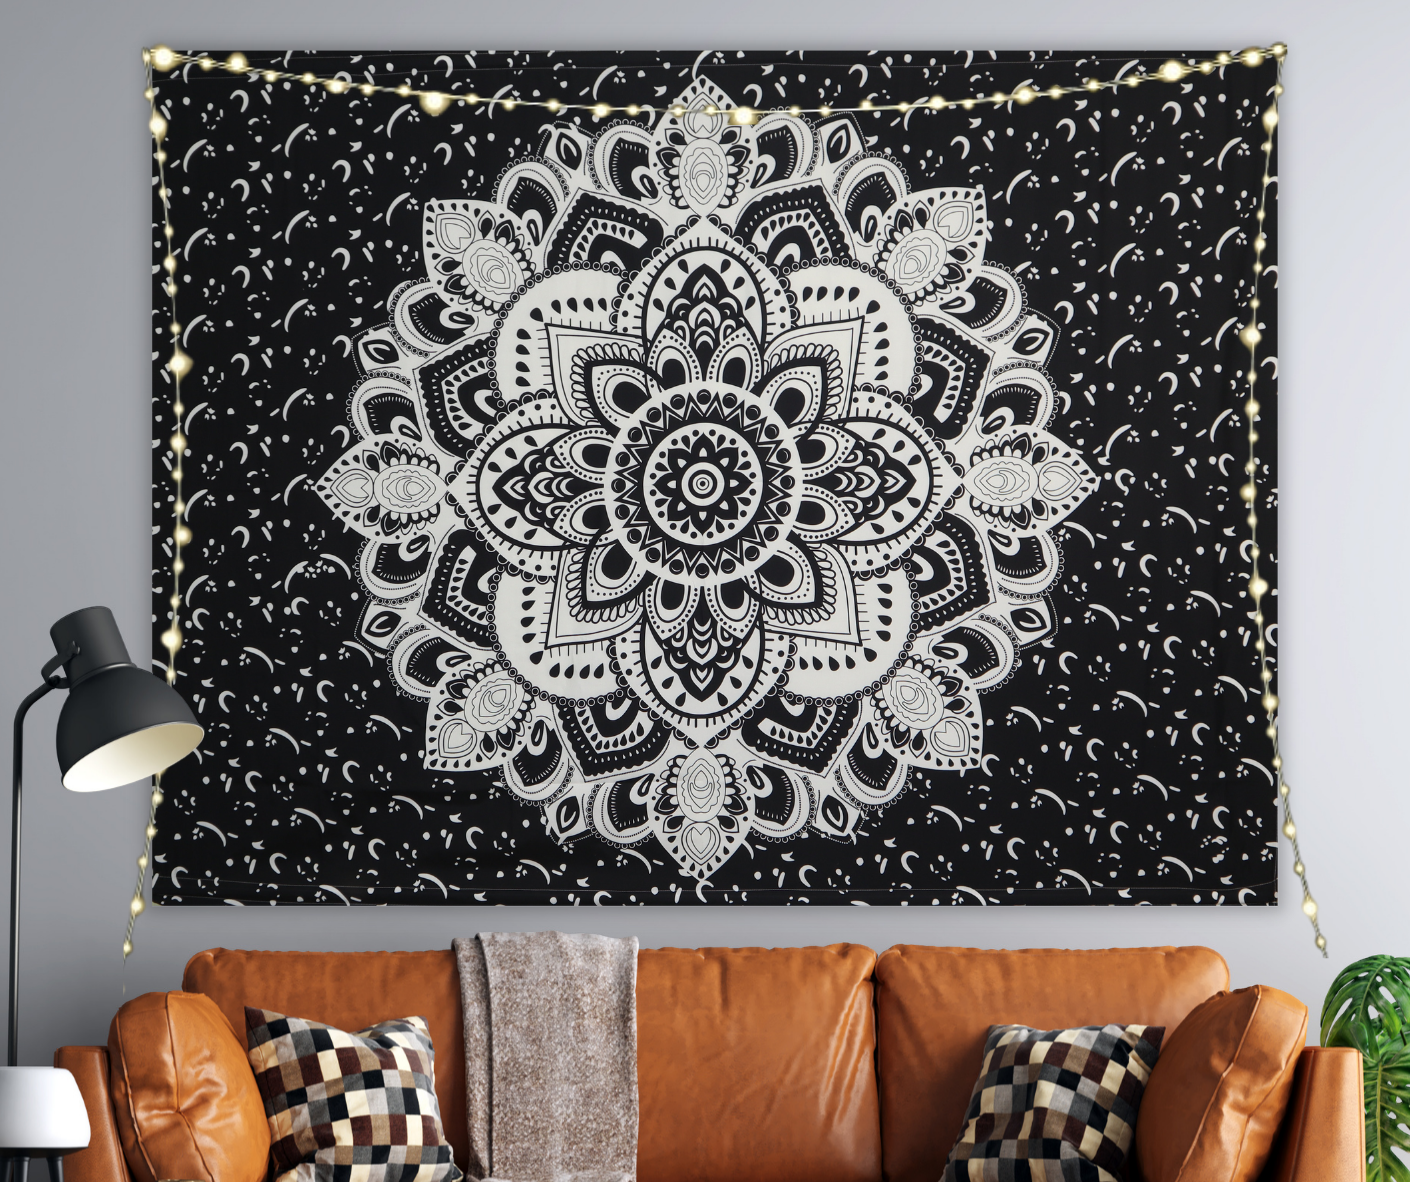 KaiSha LED Tapestry Wall Hanging; Bohemian Psychedelic Hippie Mandala Art Home Décor Large Black Boho Artwork (79"x59")